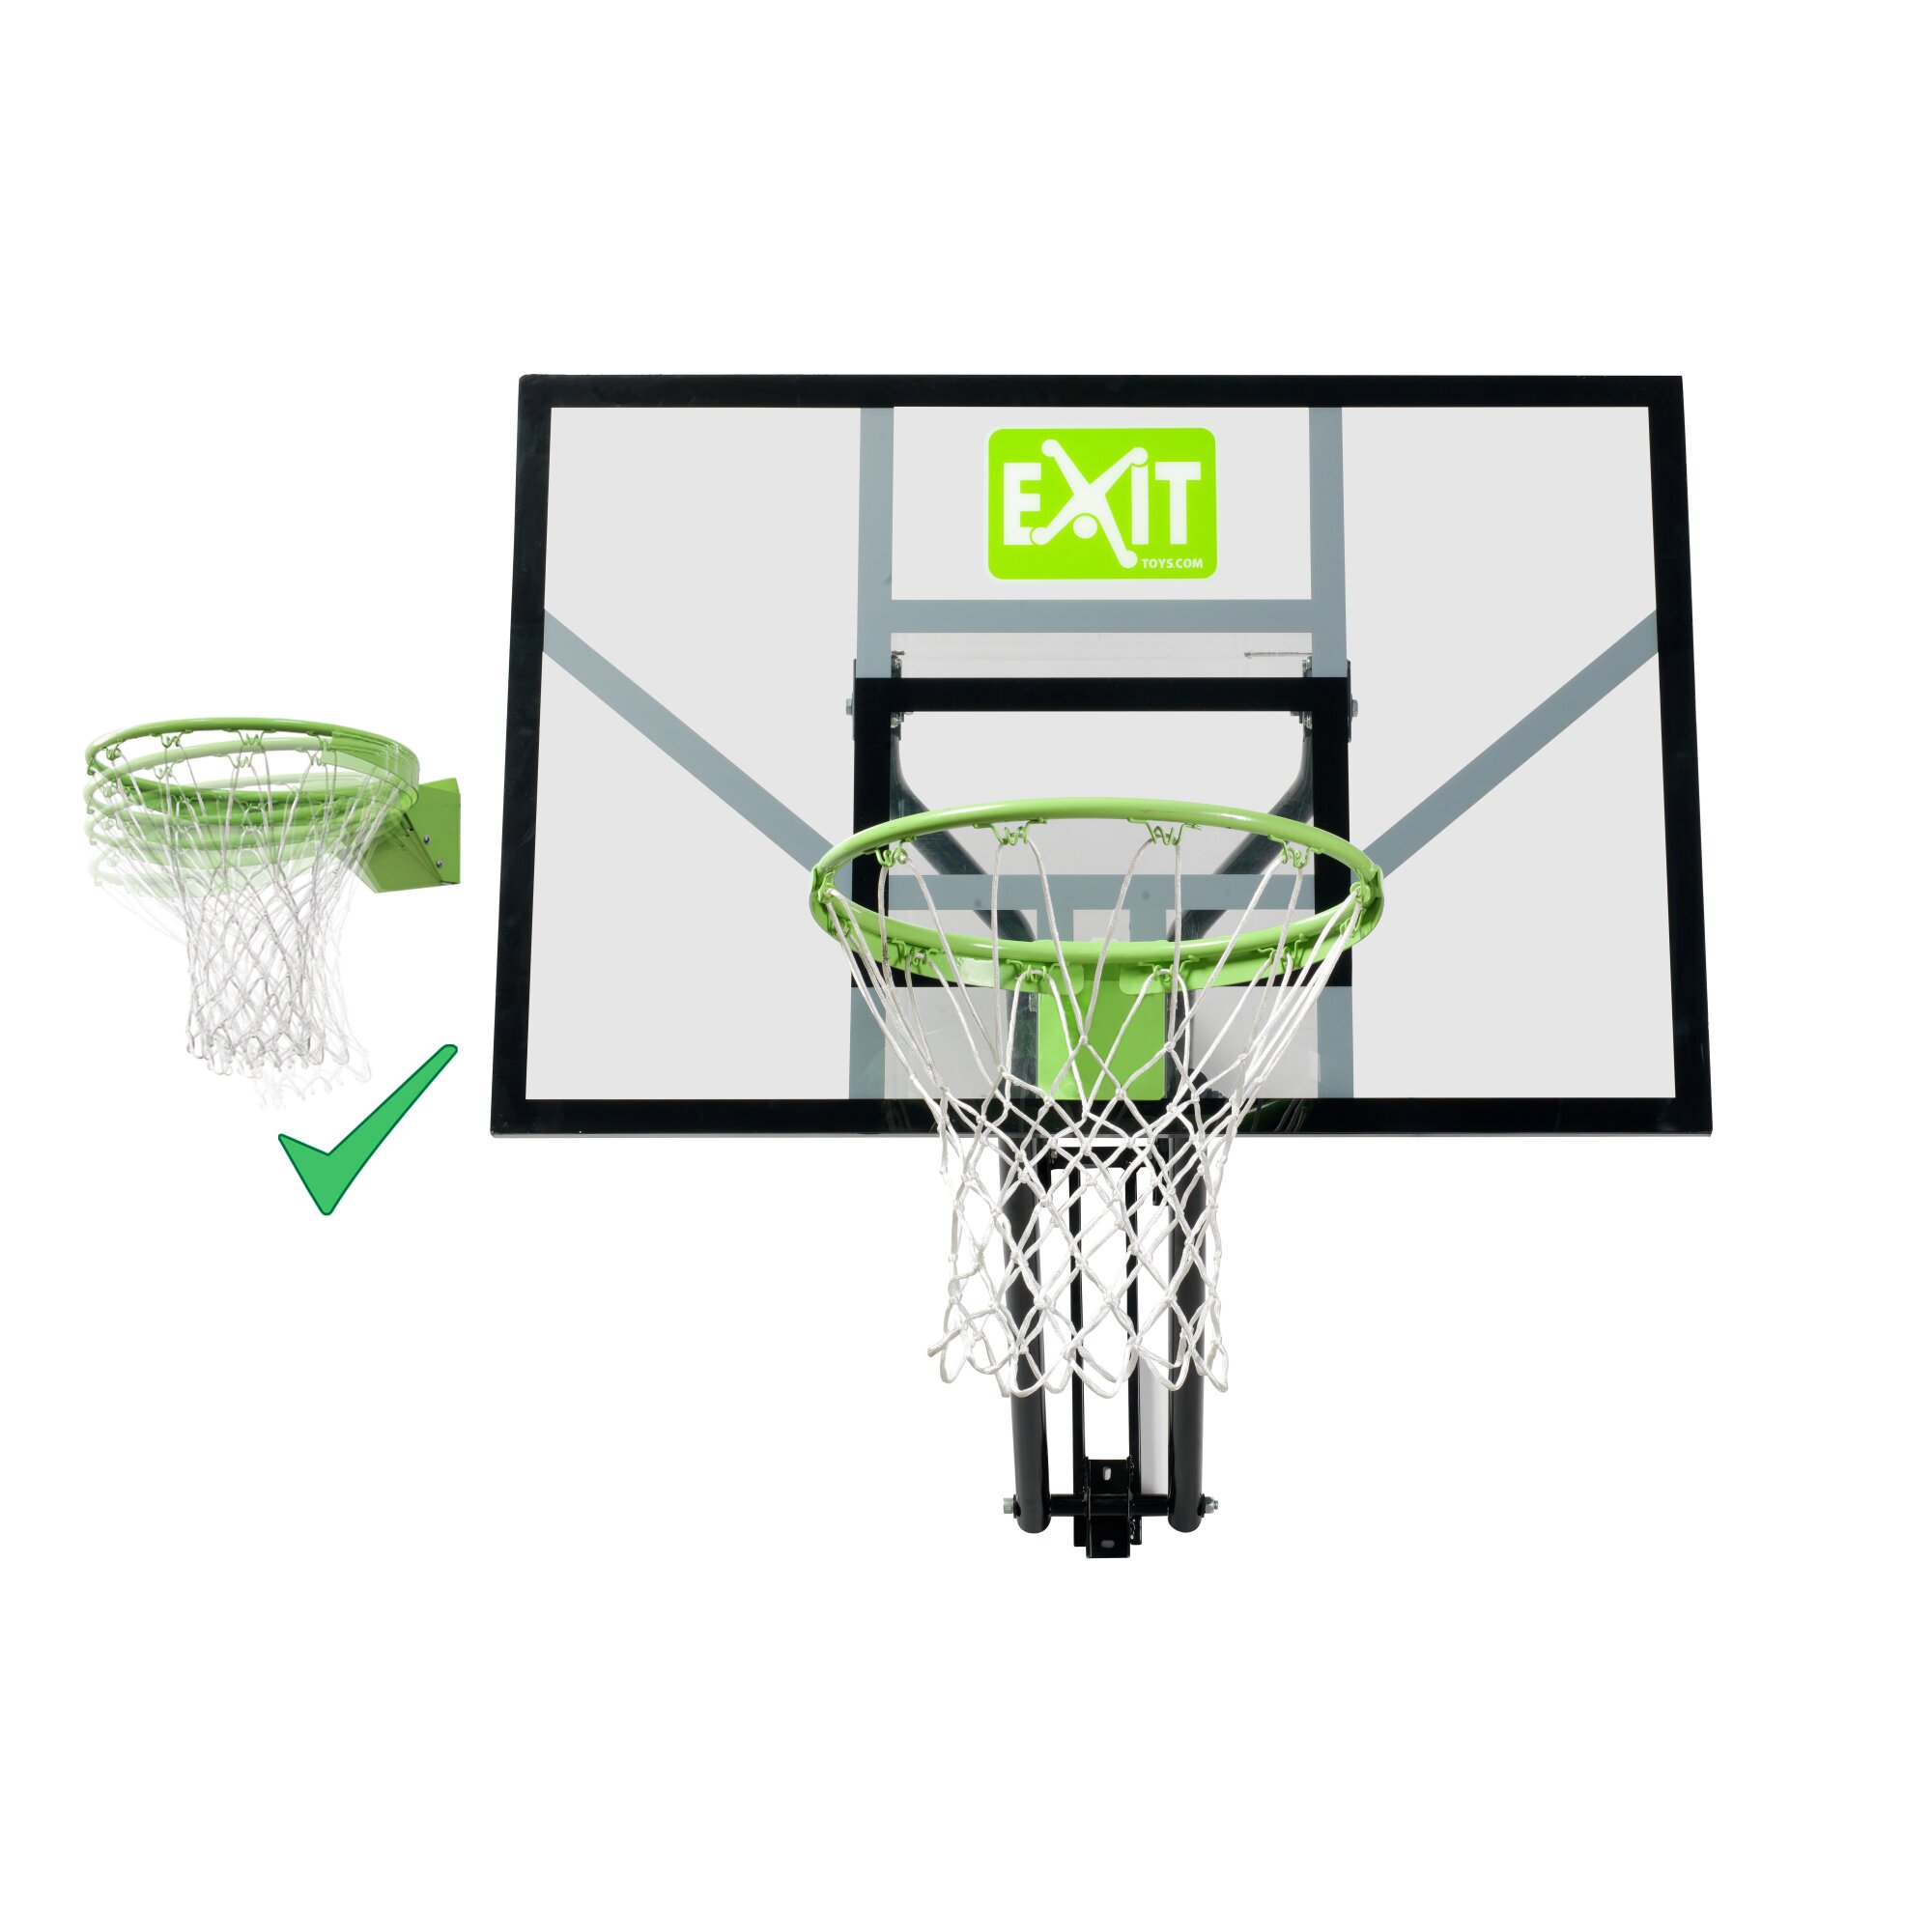 EXIT Galaxy Basketballkorb Wandmontage inkl. Dunkring grün/schwarz unten